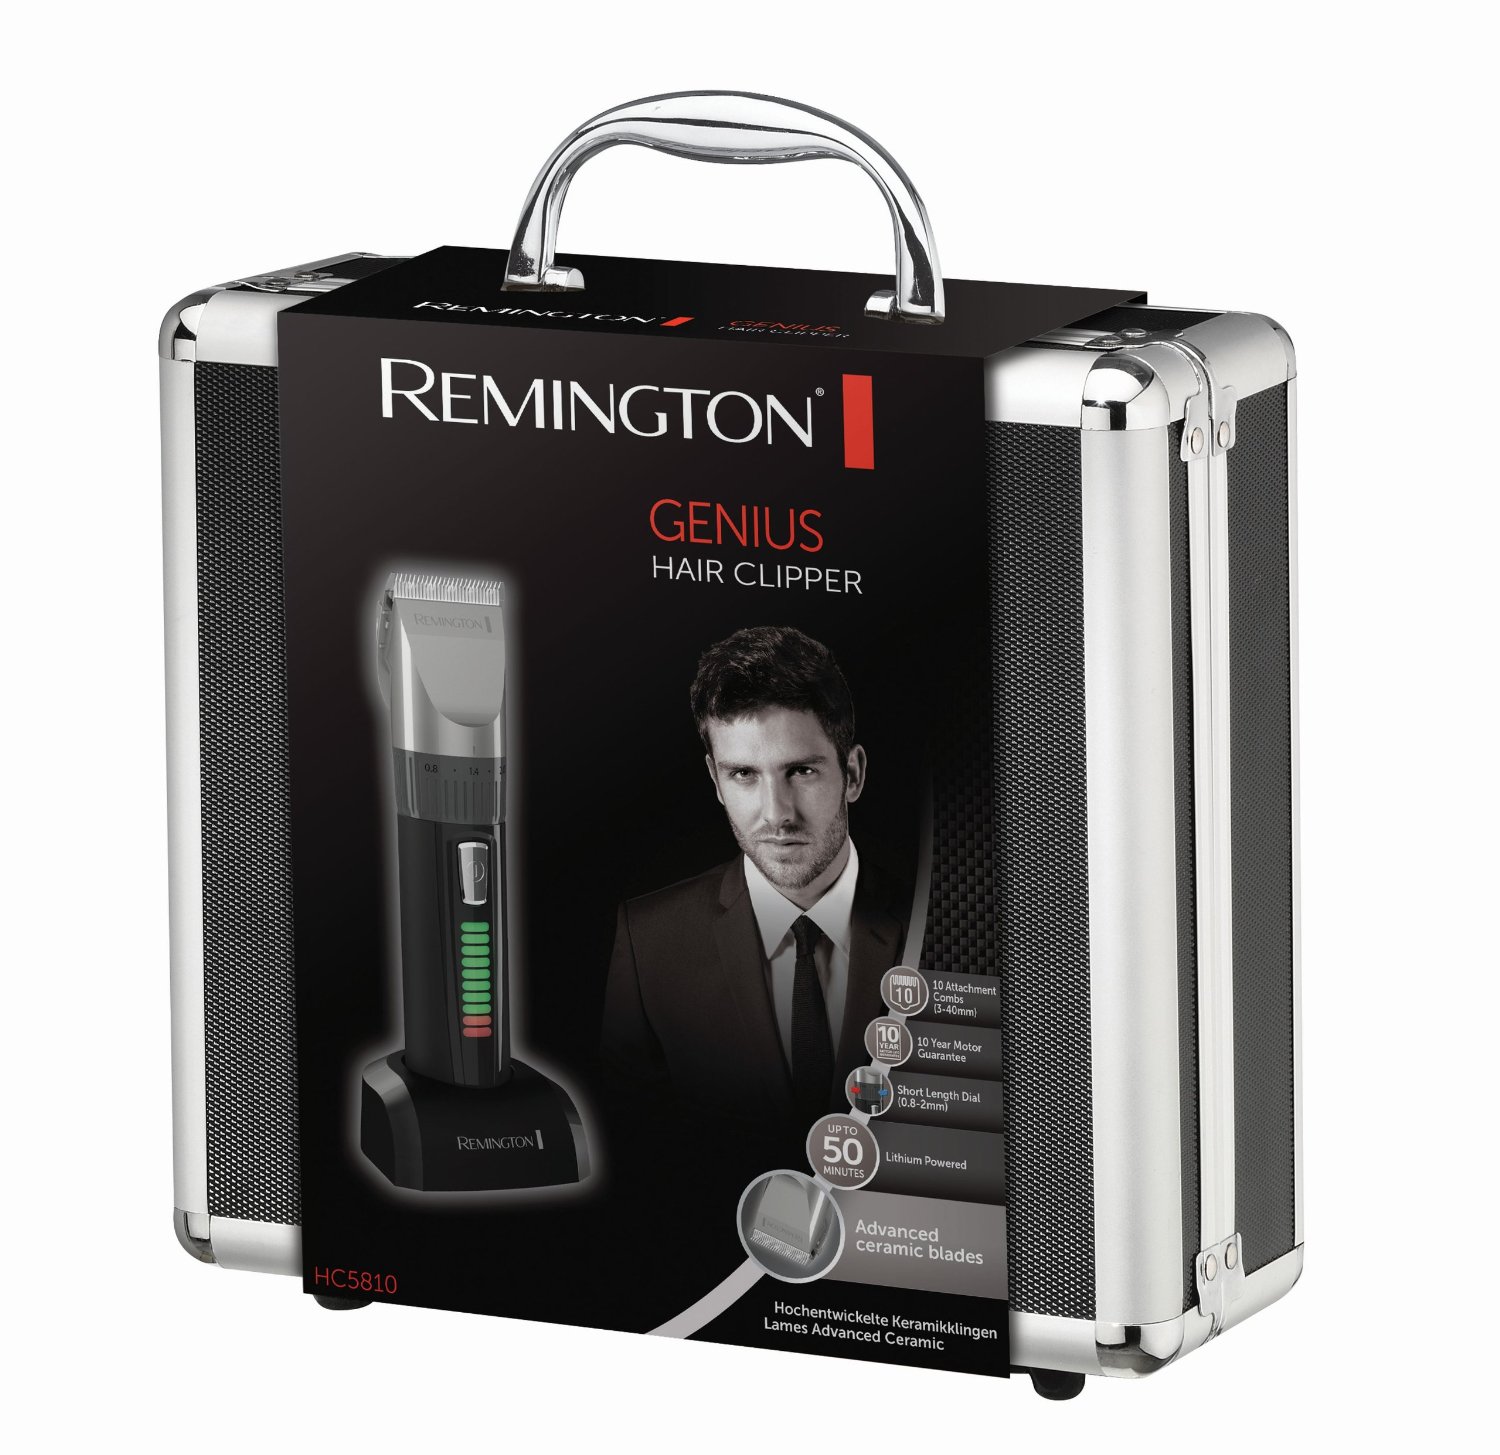 Remington REM-HC5810 tondeuse